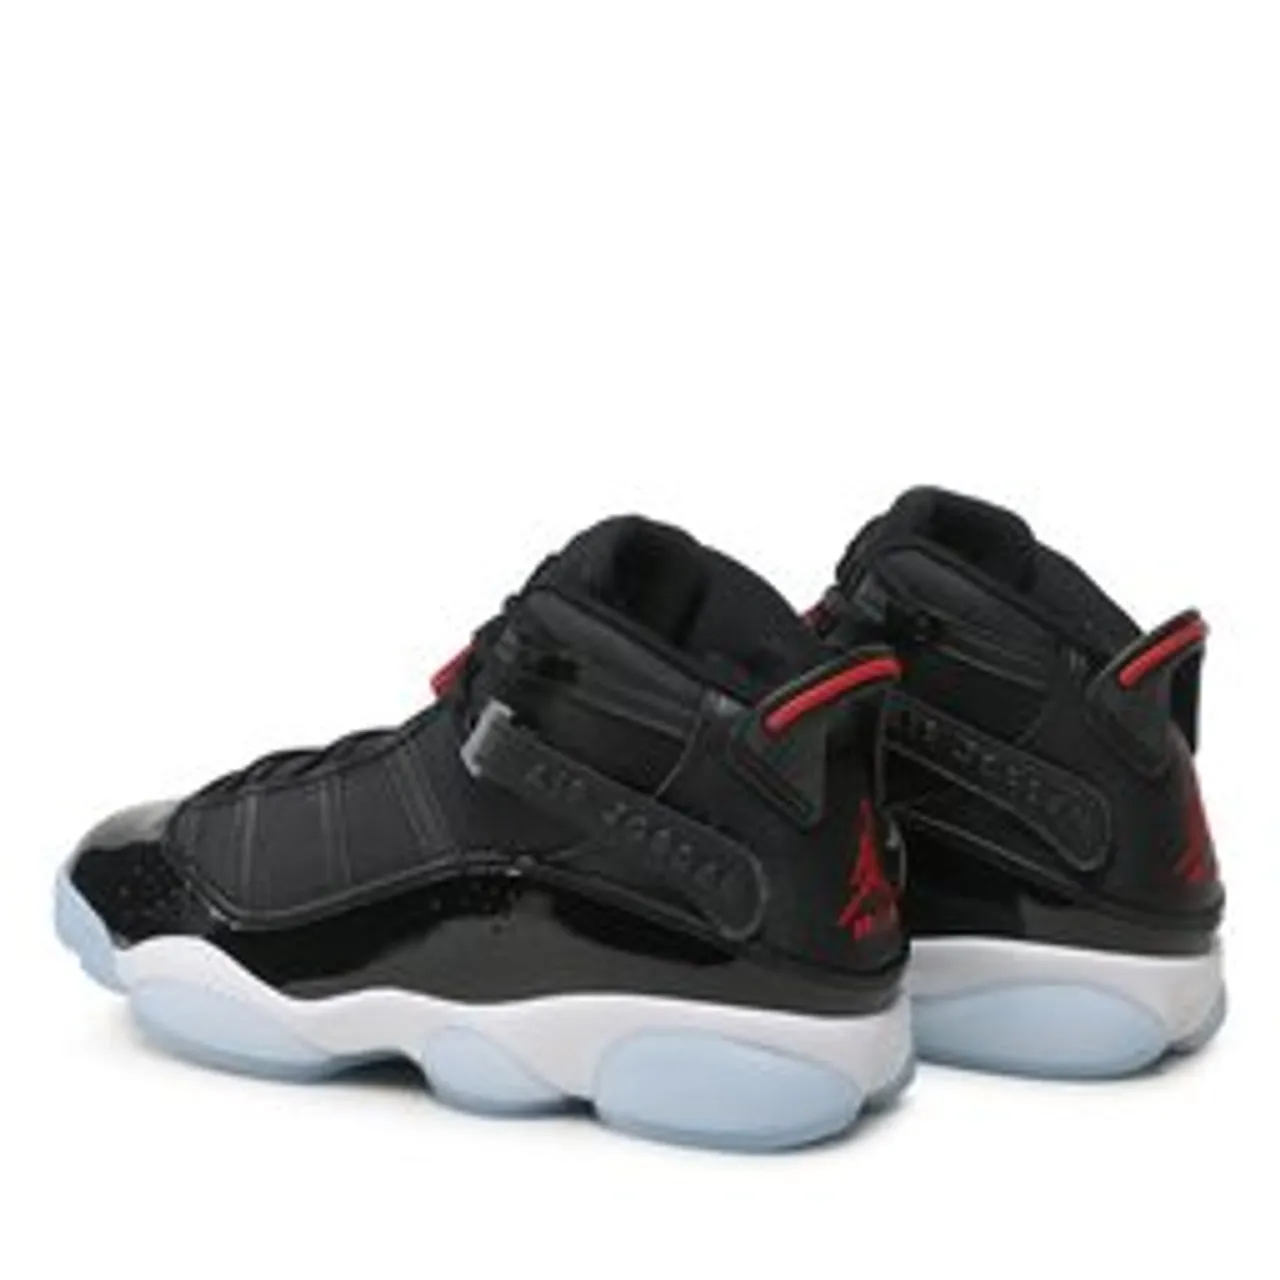 Sneakers Nike Jordan 6 Rings 322992 064 Schwarz